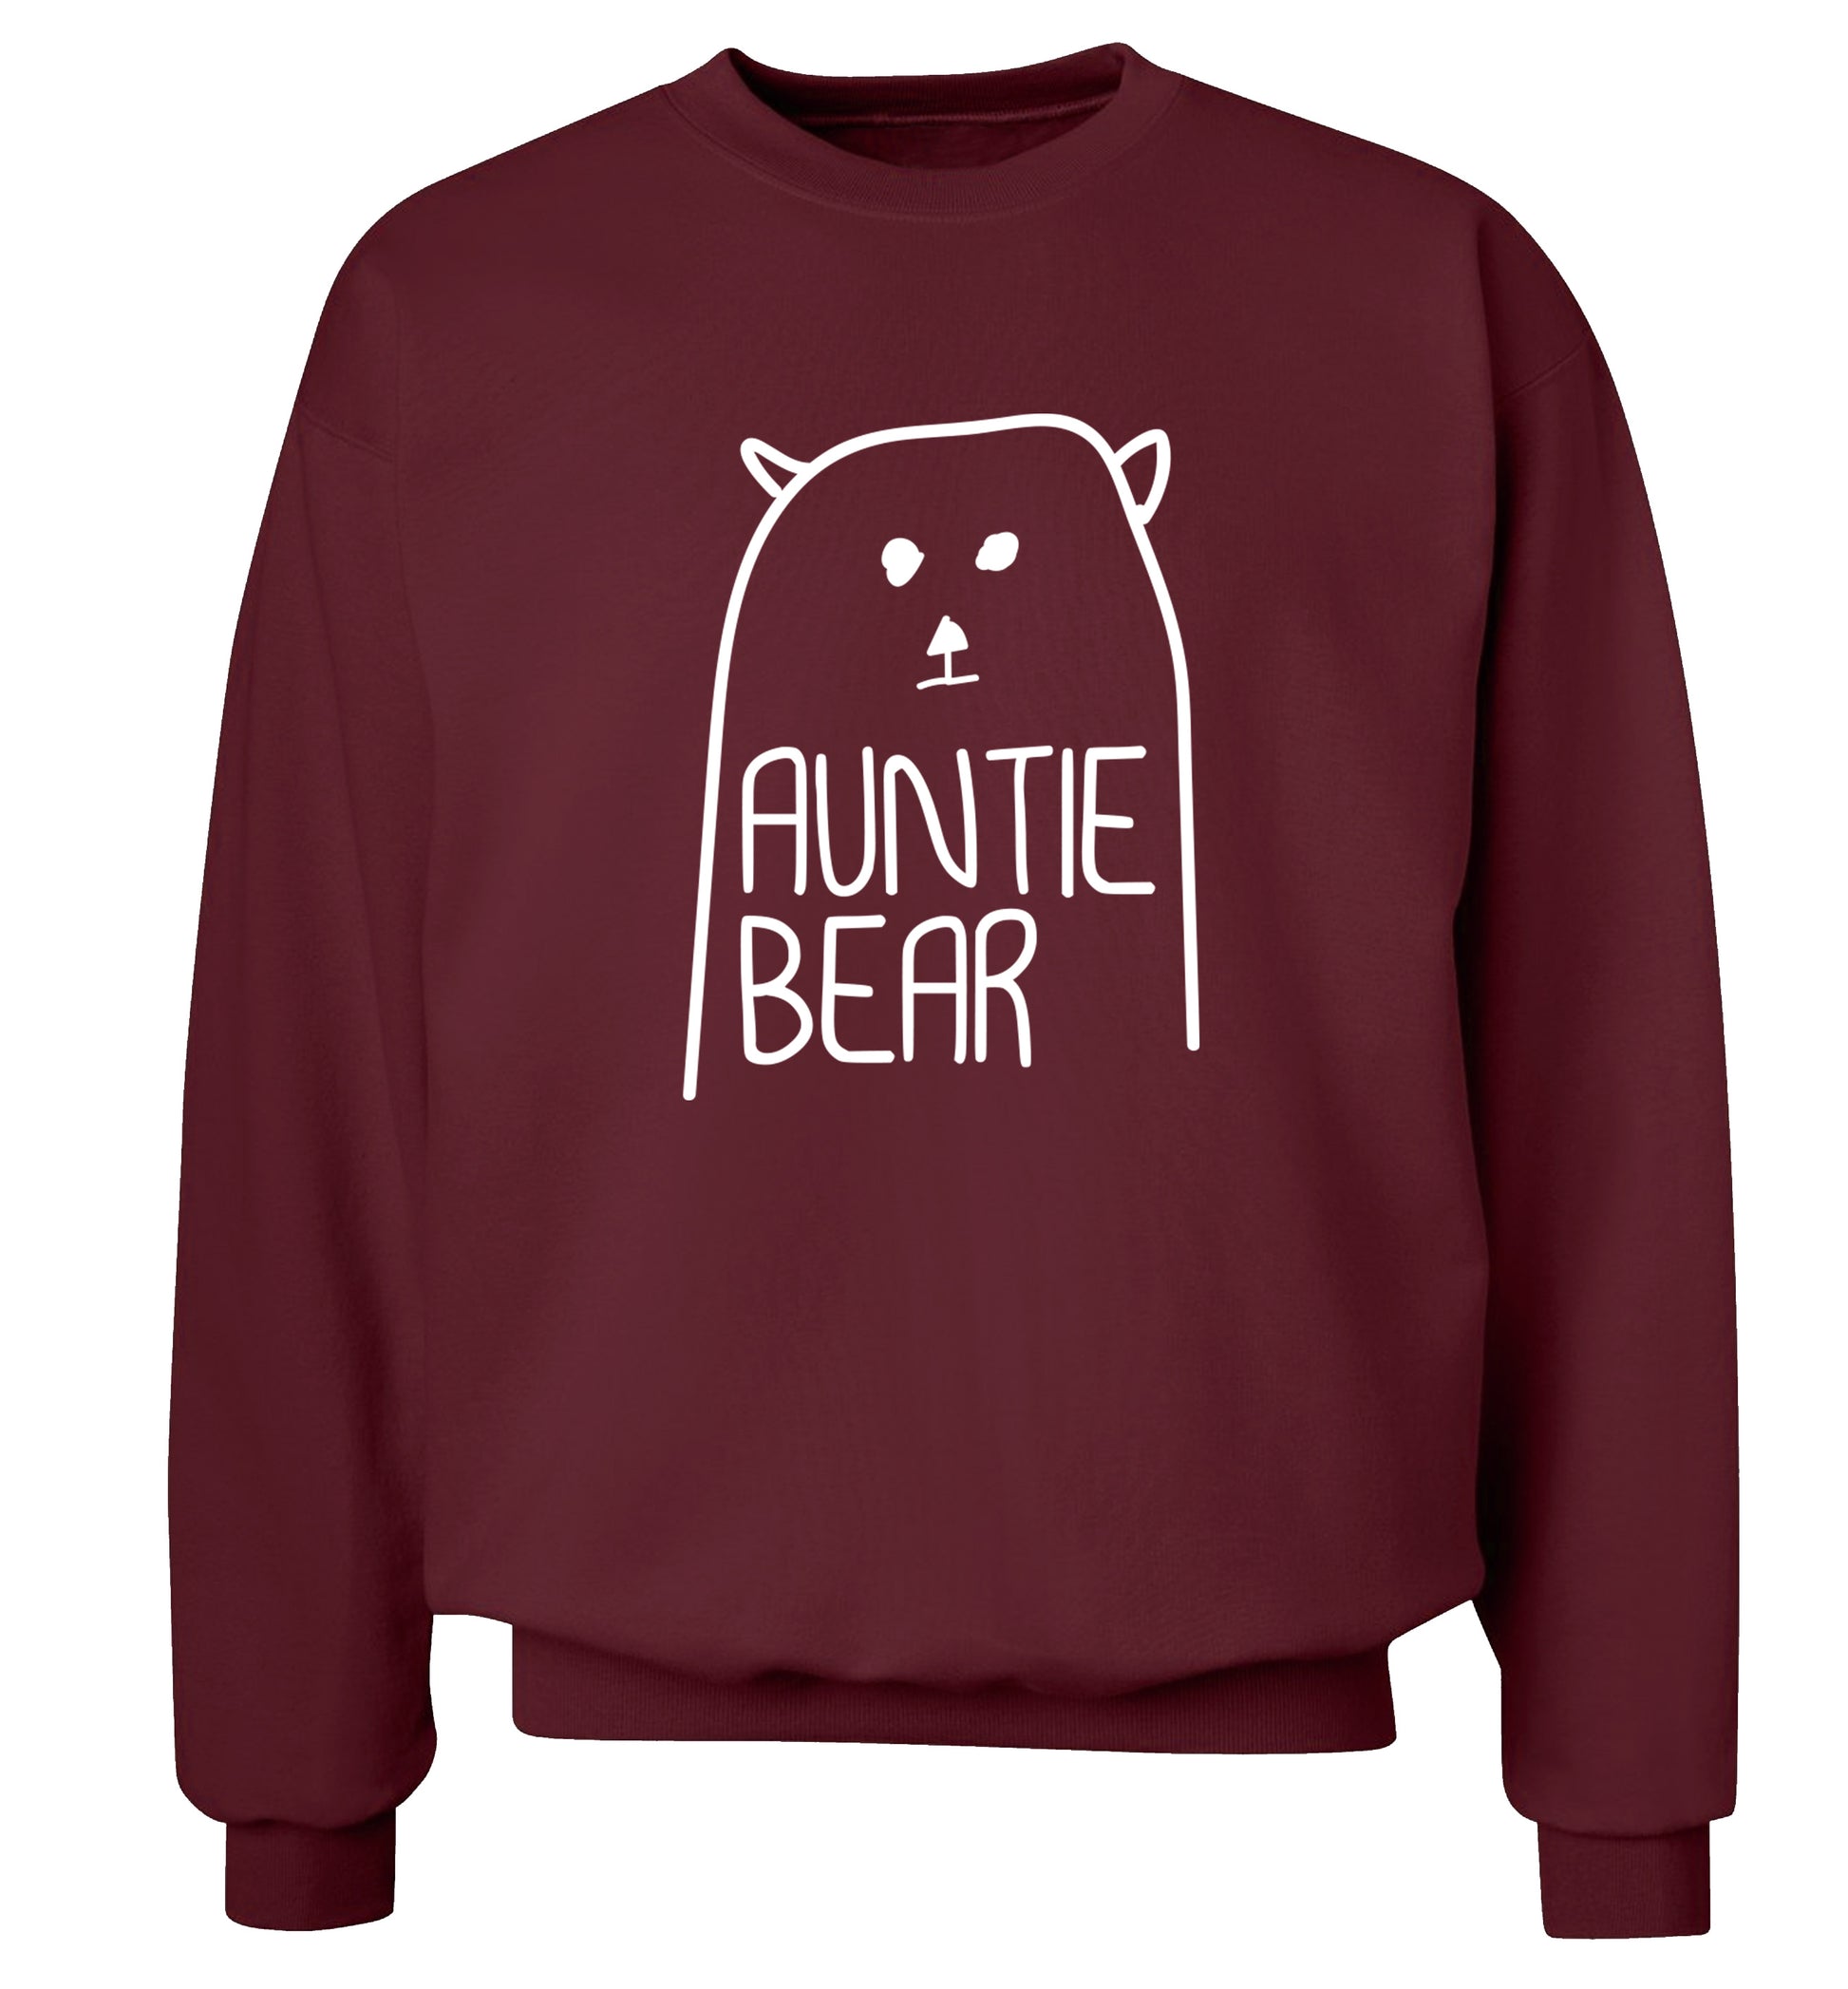 Auntie bear Adult's unisex maroon Sweater 2XL